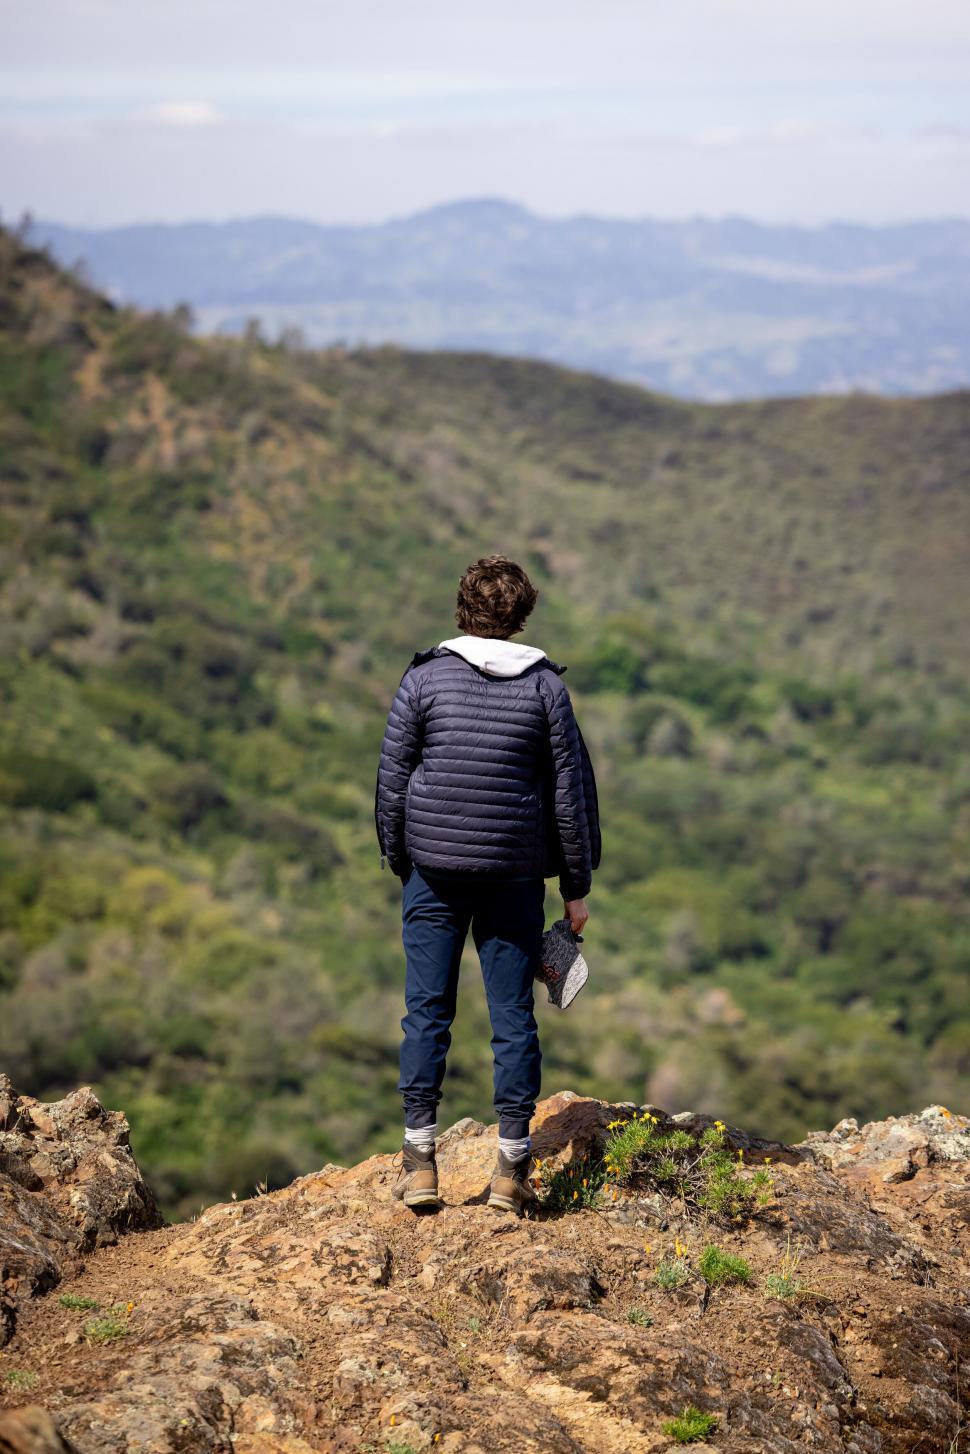 Free Image of Man looking at mountainous landscape 